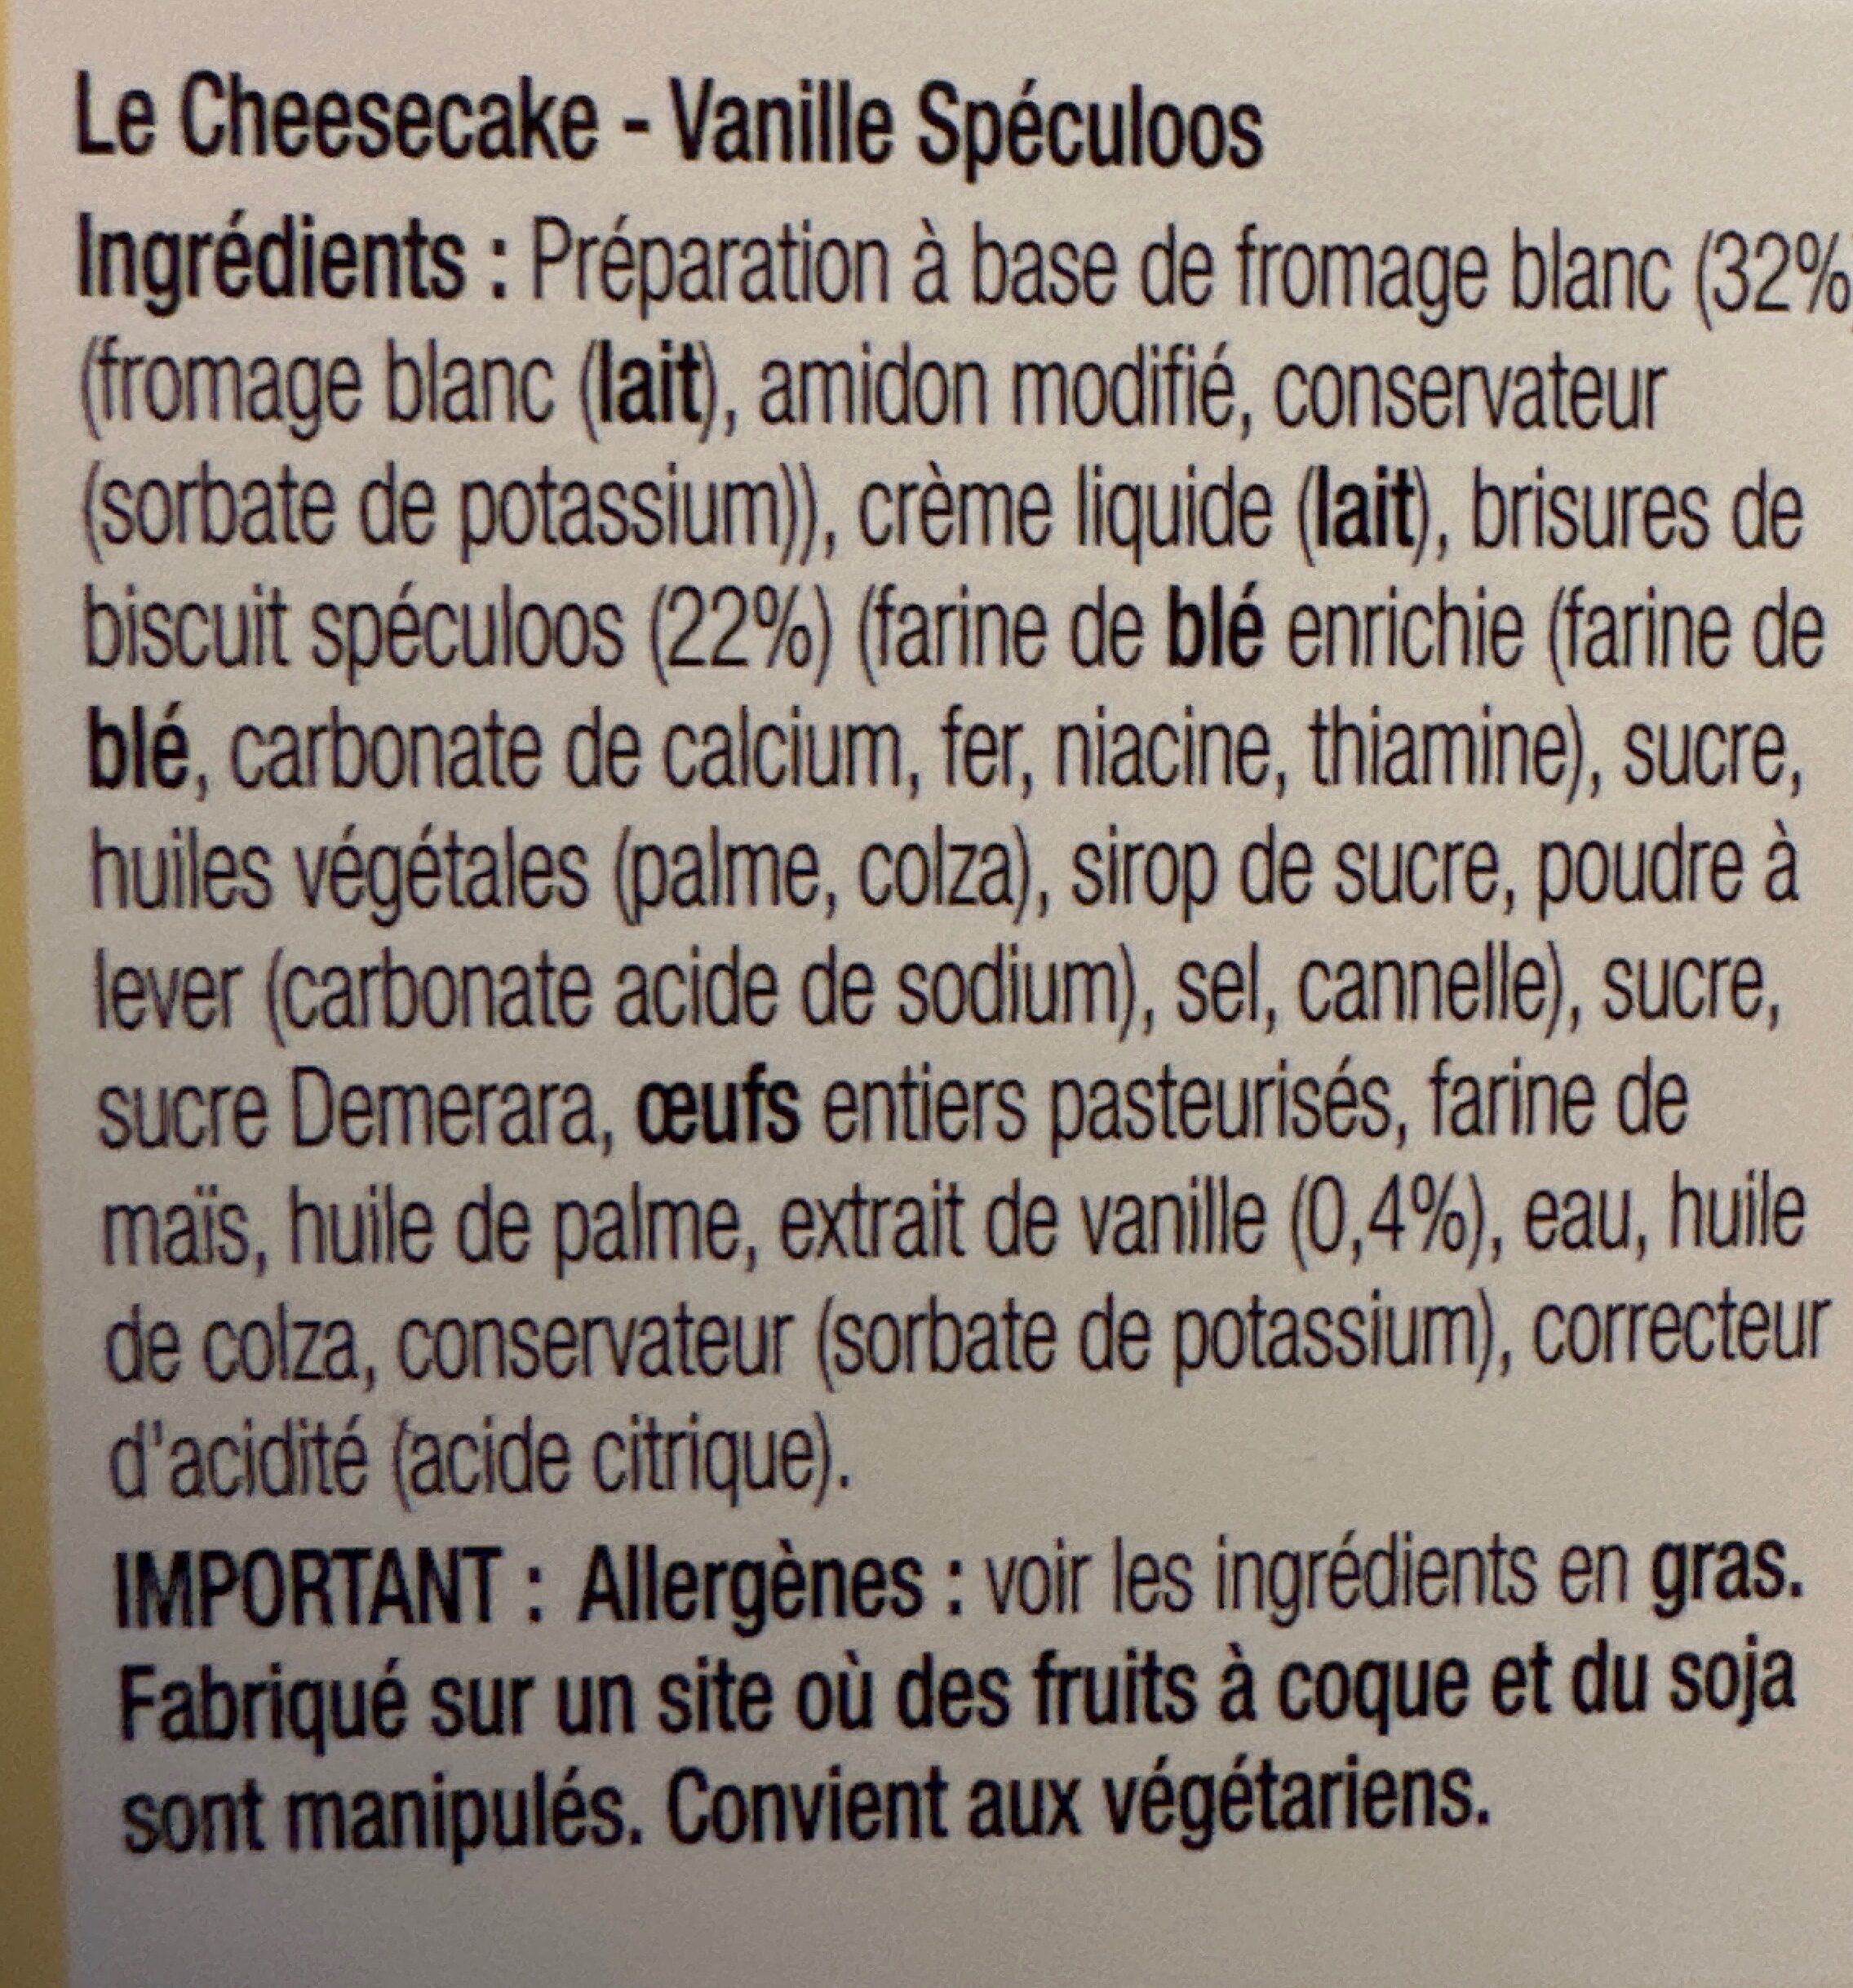 Cheesecake - Vanille speculoos - Ingrédients